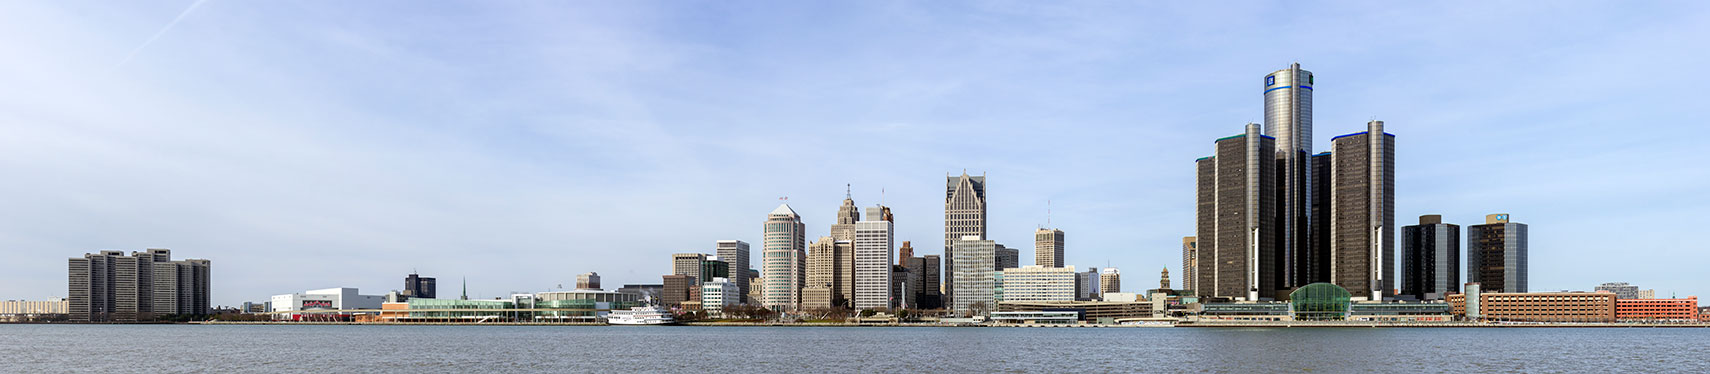 Skyline of Detroit, Michigan